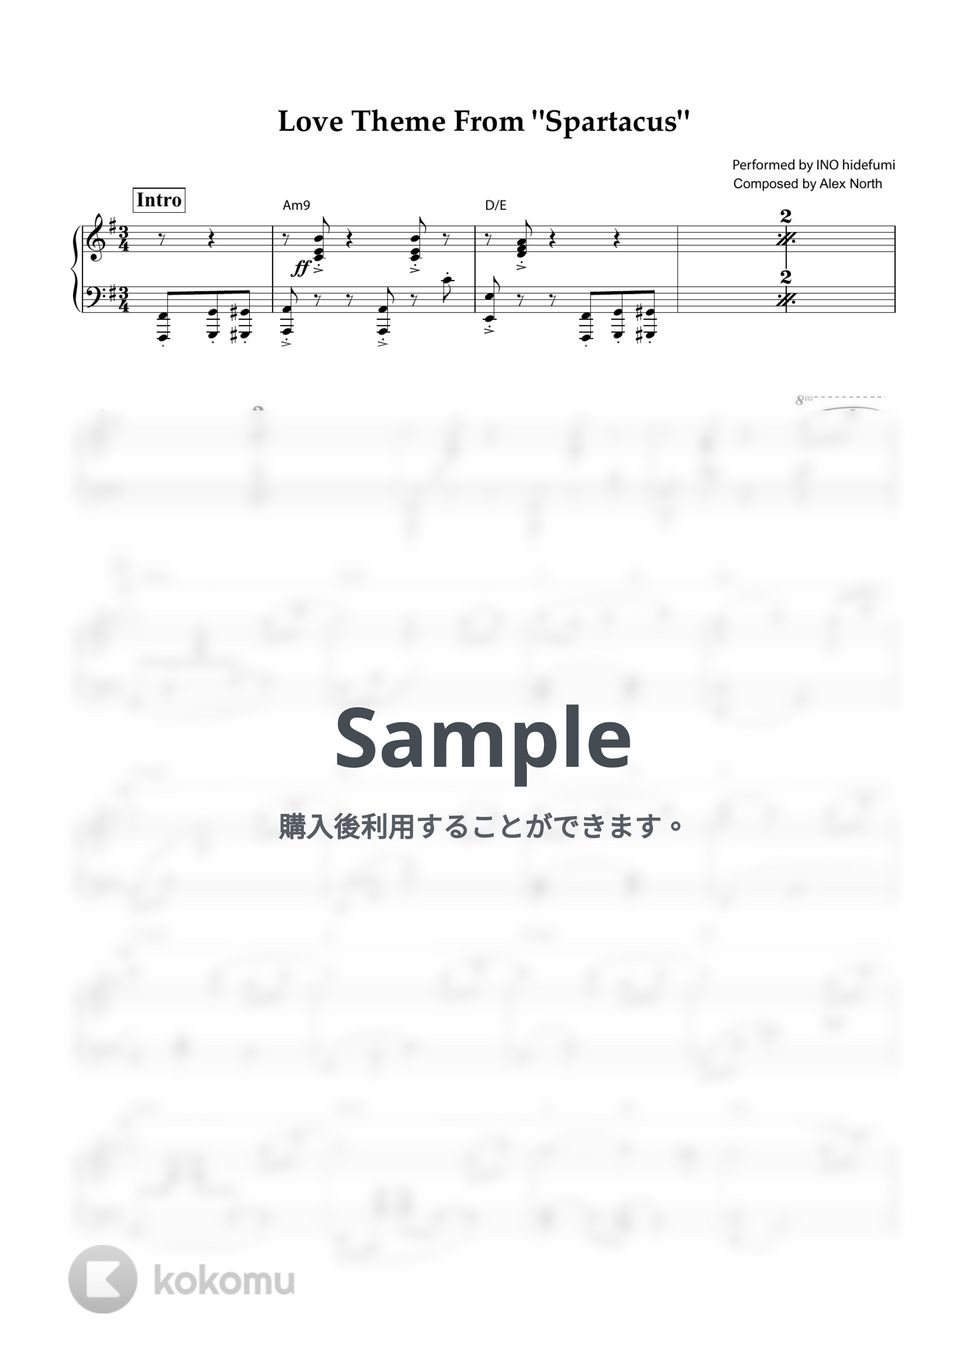 Ino Hidefumi - Love Theme From Spartacus〜スパルタカス 愛のテーマ - Ino Hidefumi（ソロピアノ譜） (ピアノ・ソロ) by ebony-ivory